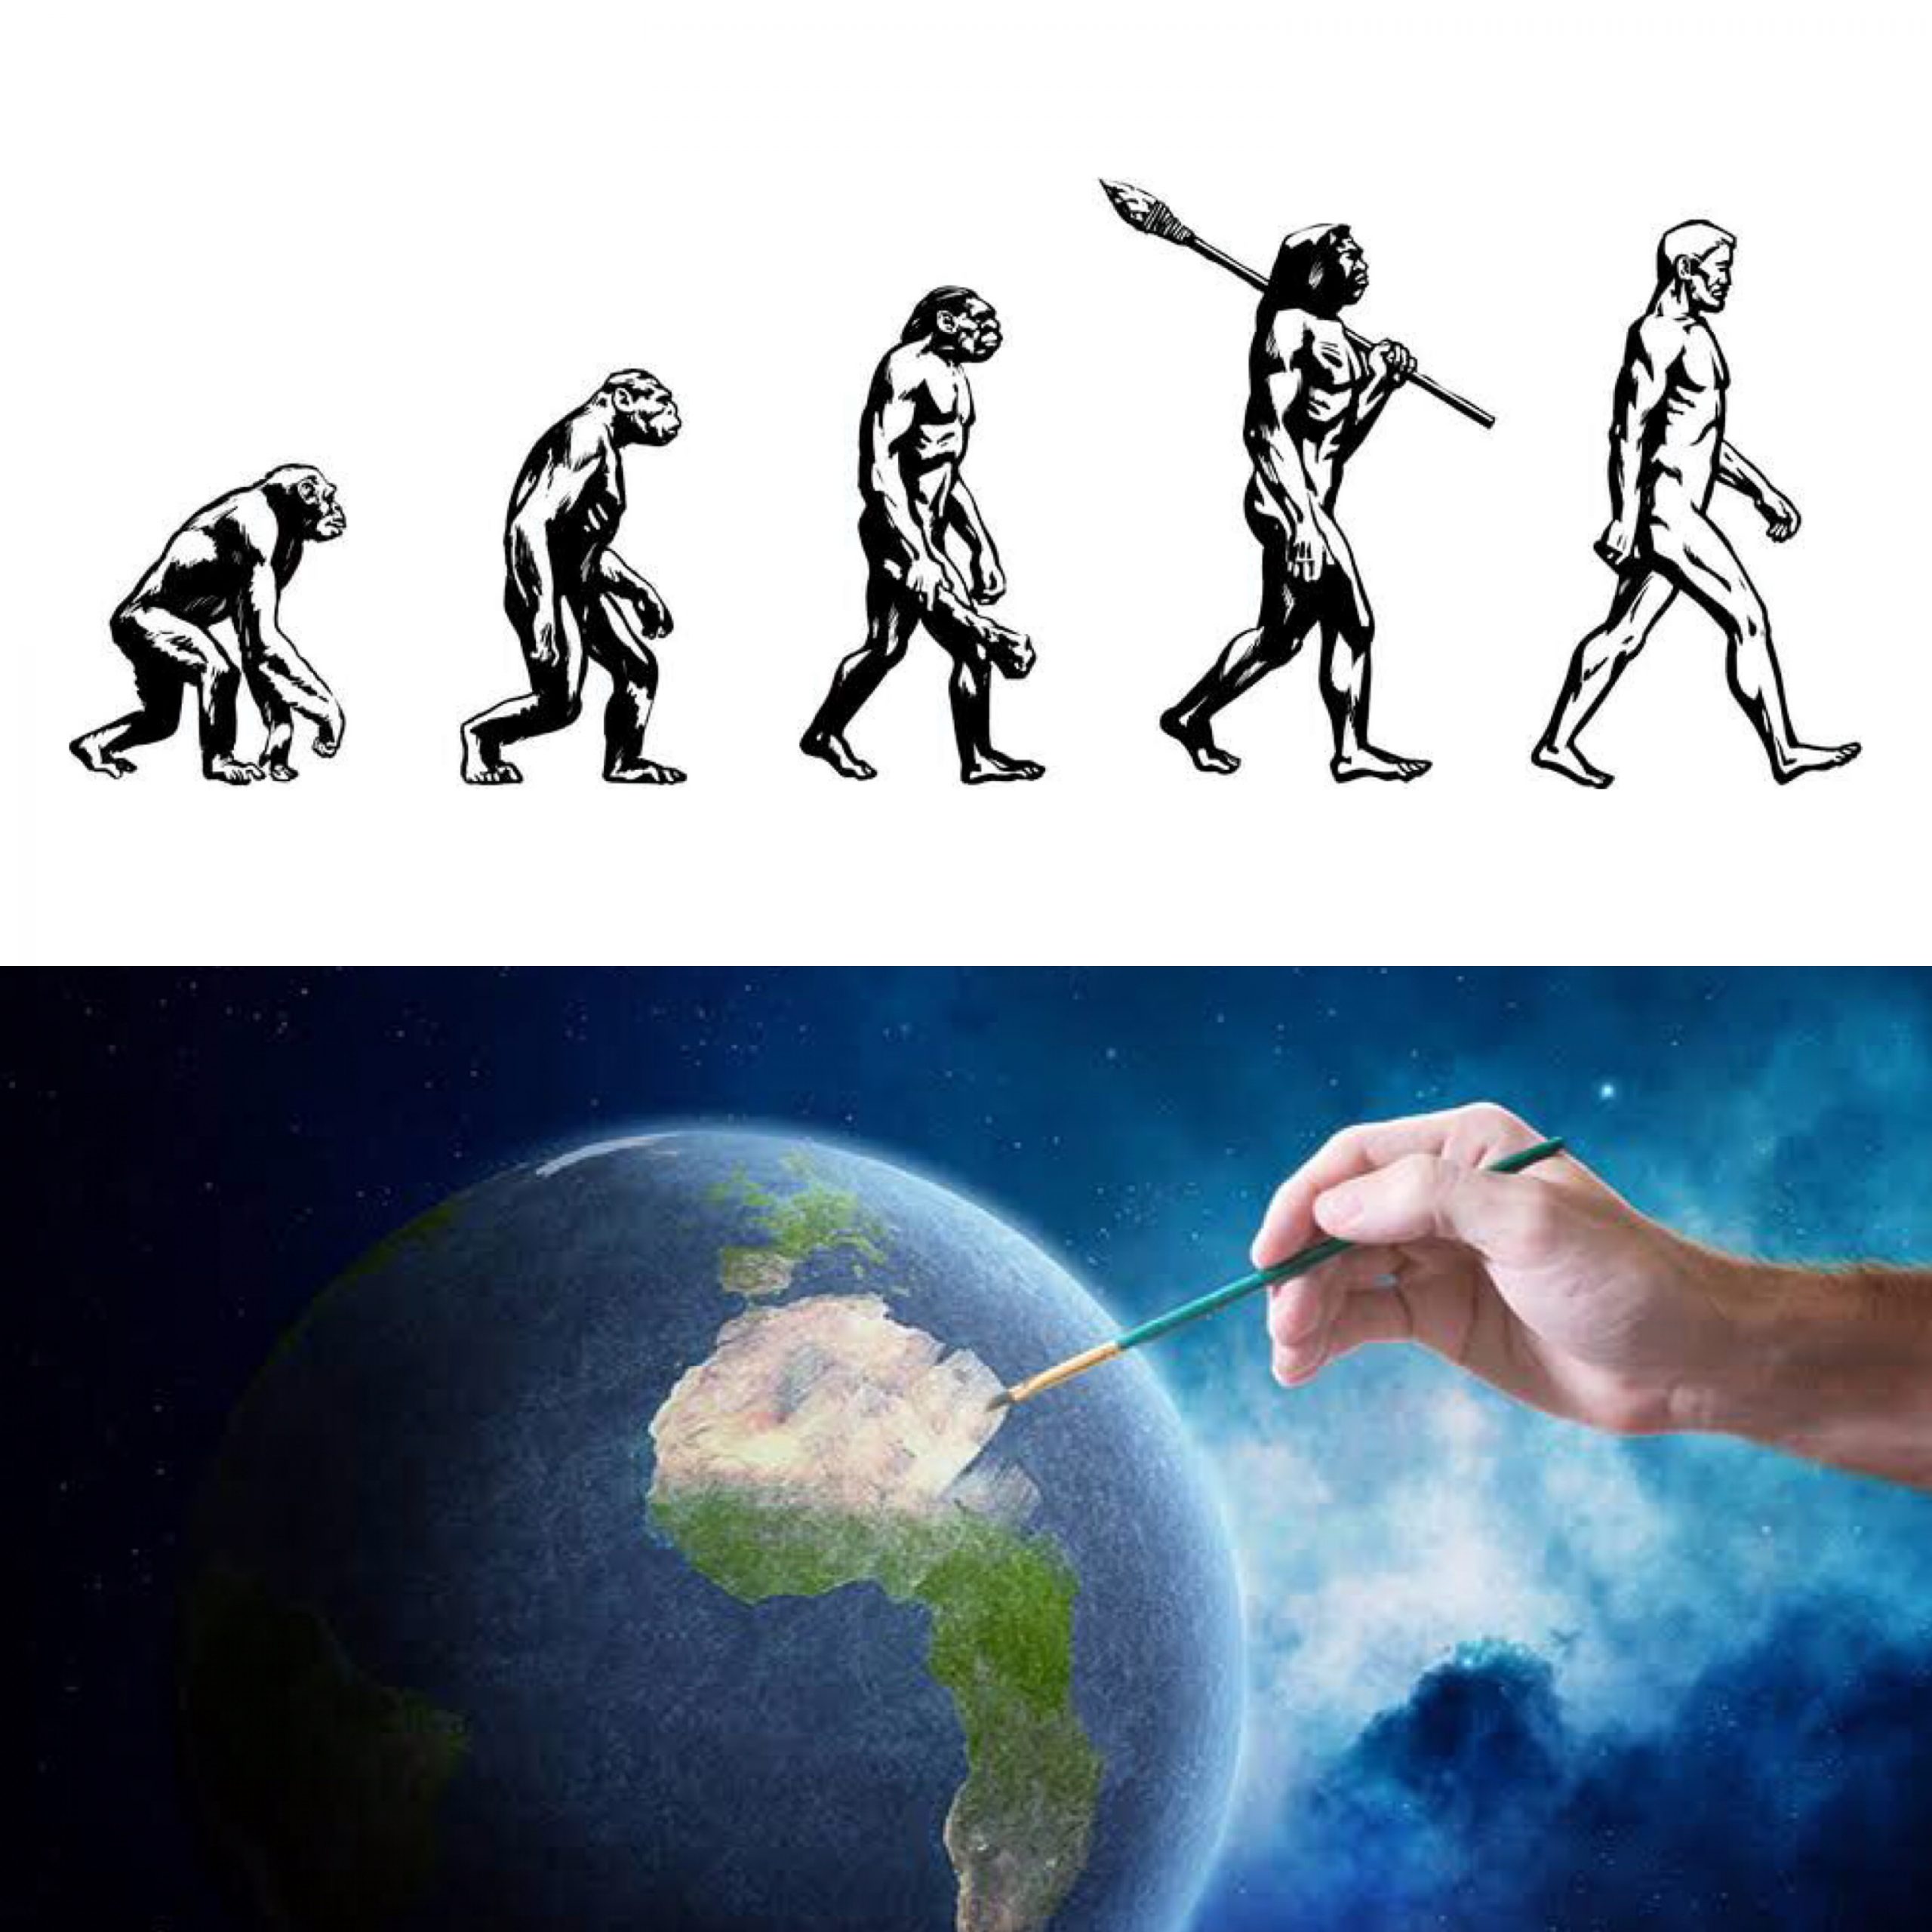 EVOLUTION VS CREATIONISM